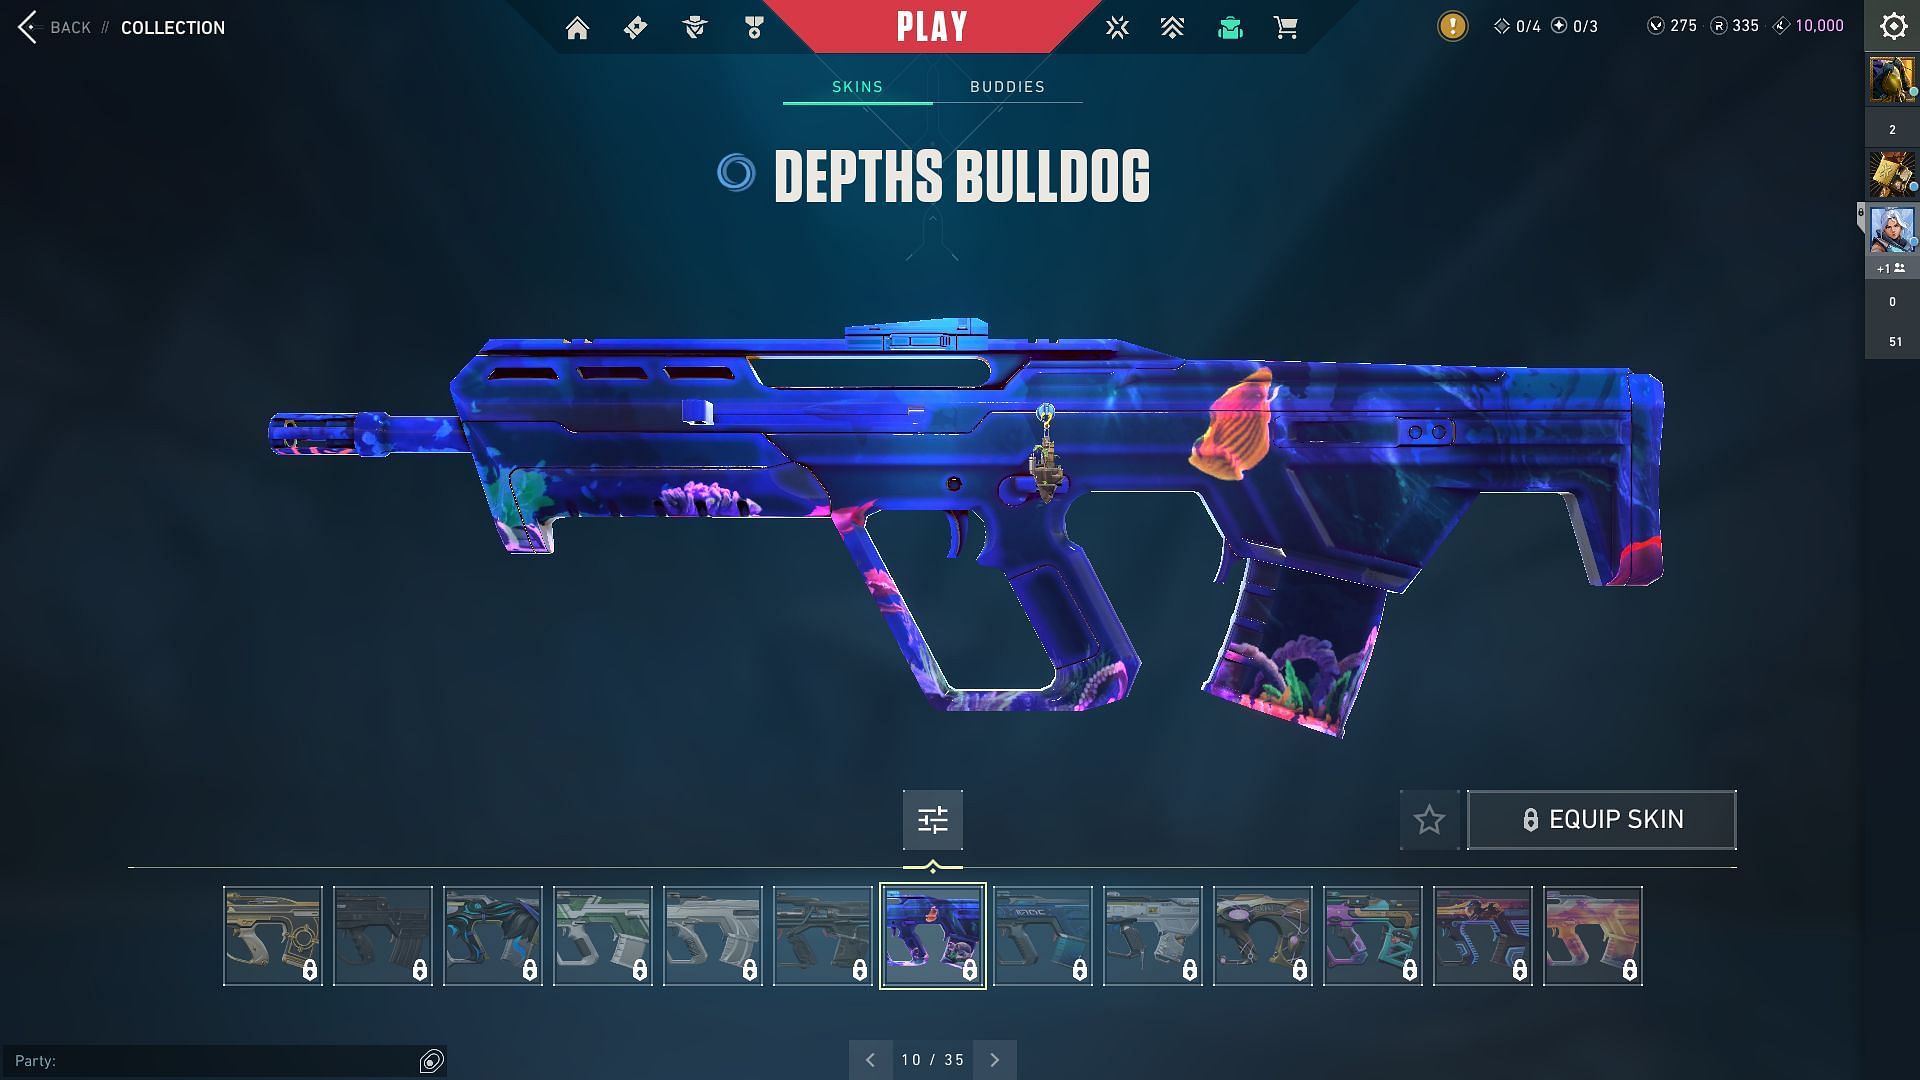 Depths Bulldog (Image via Sportskeeda and Riot Games)